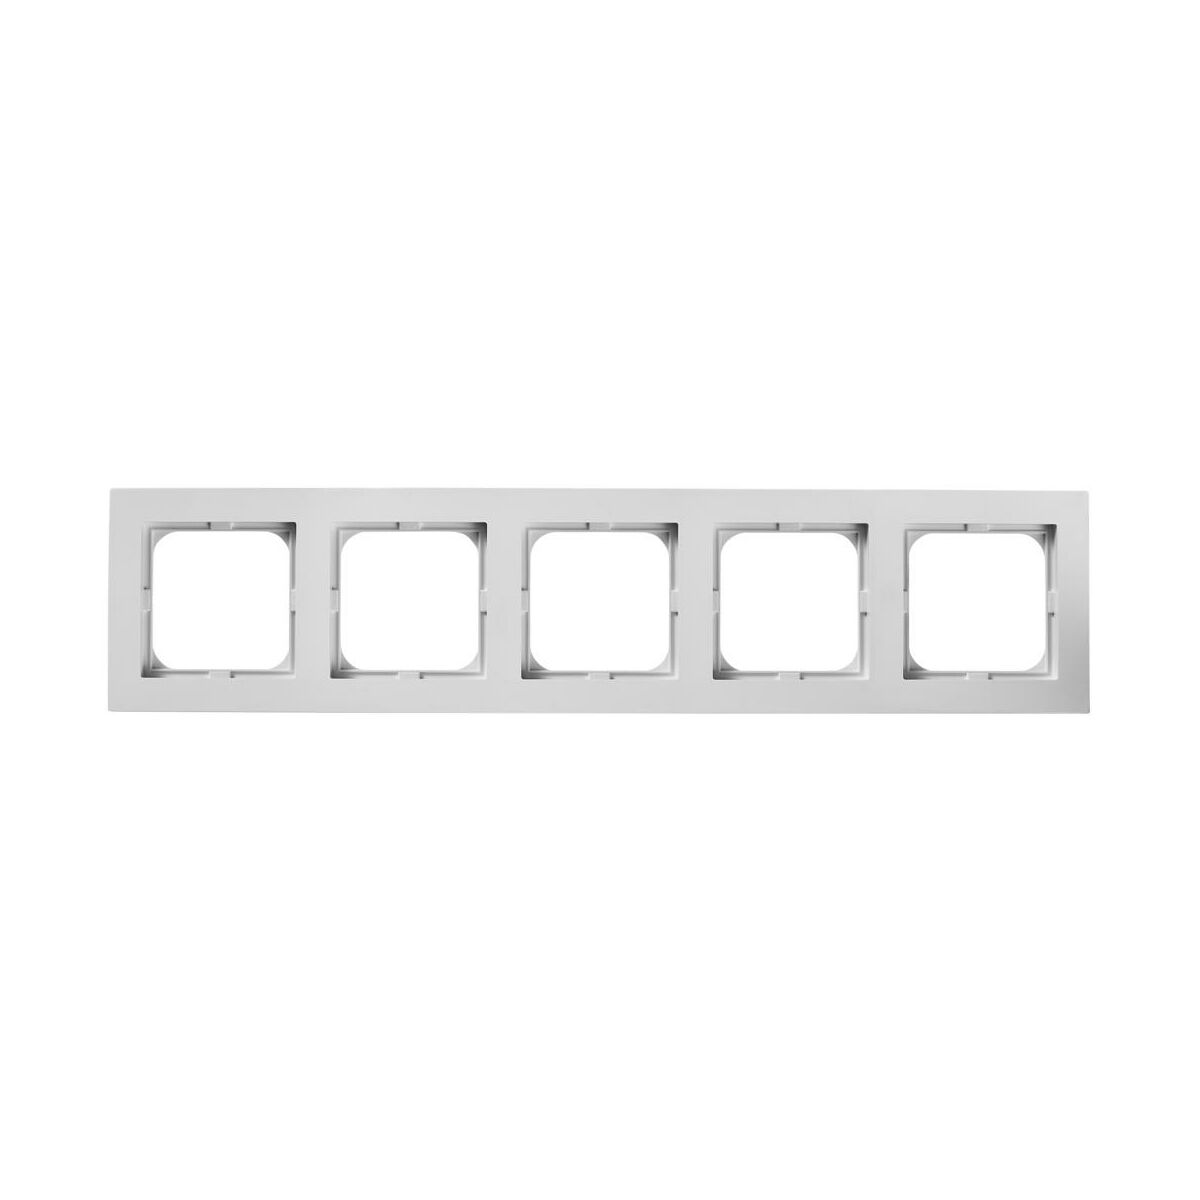 LEDart 5-krotna, pozioma i pionowa- Ospel As R-5G/00, kolor biały